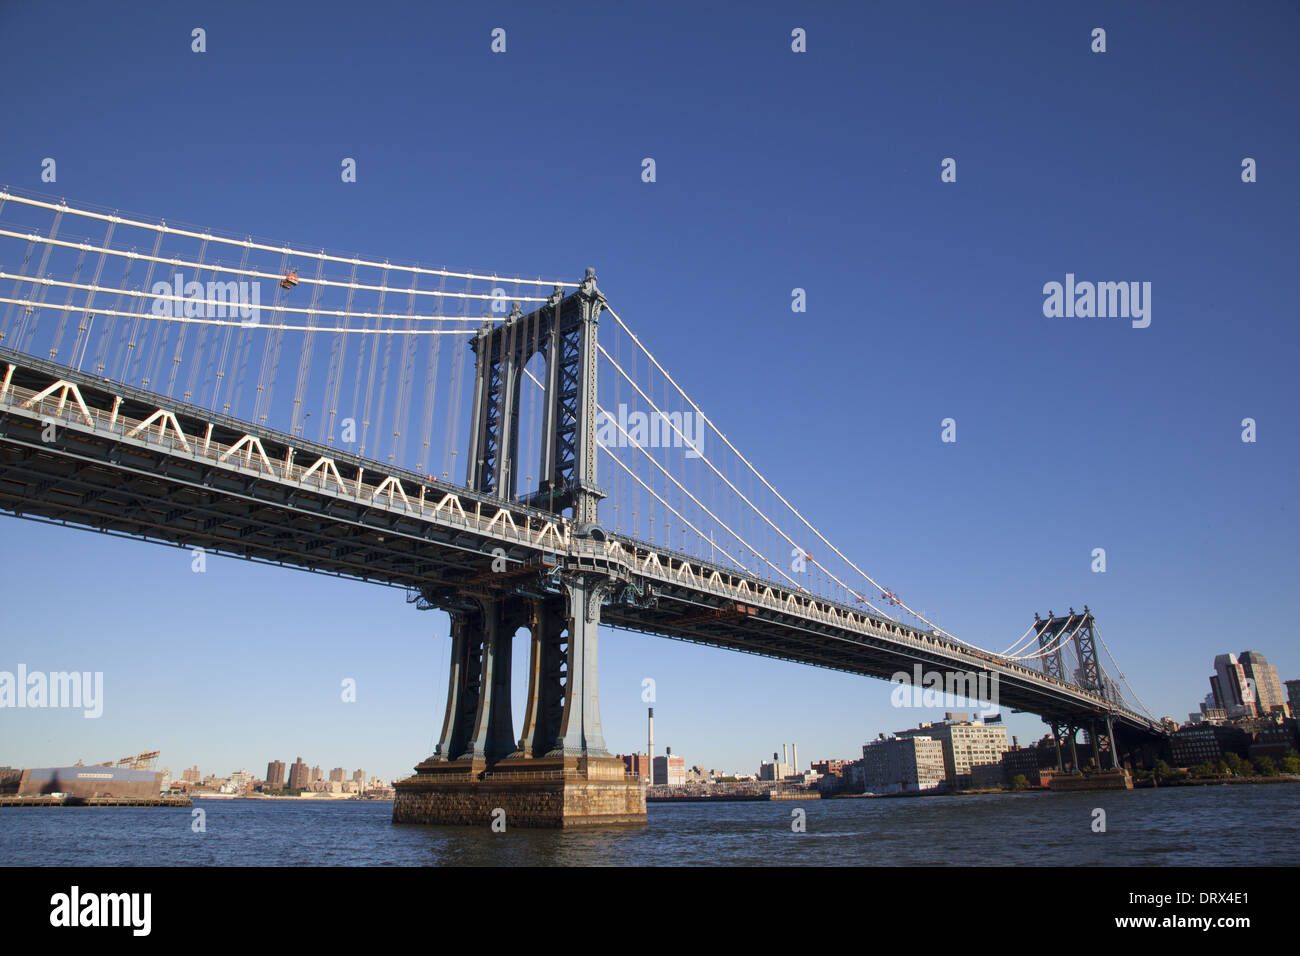 Landscape view of the Manhatten Bridge in New York City, USA. Stock Photo